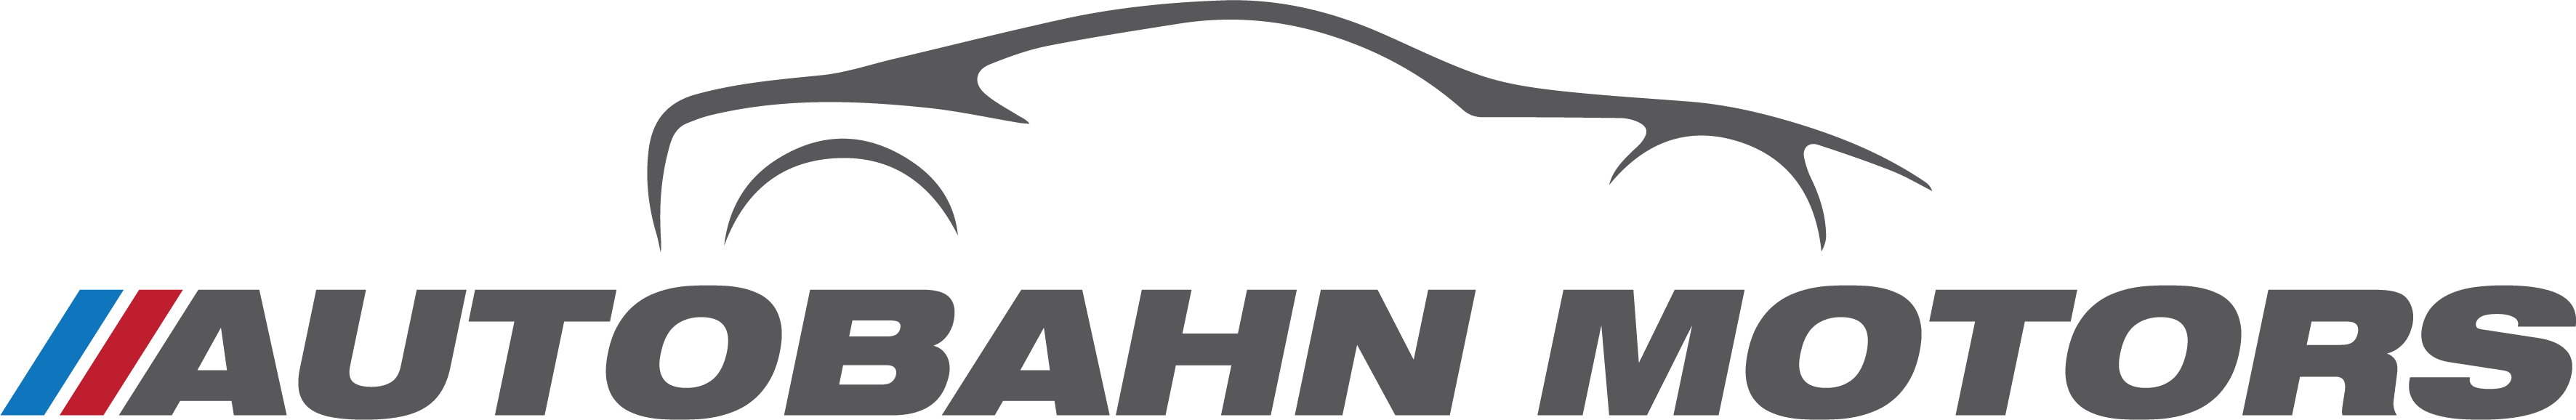 Autobahn Motors | Autobahn Motors | KZN Car Dealership, Service & Parts